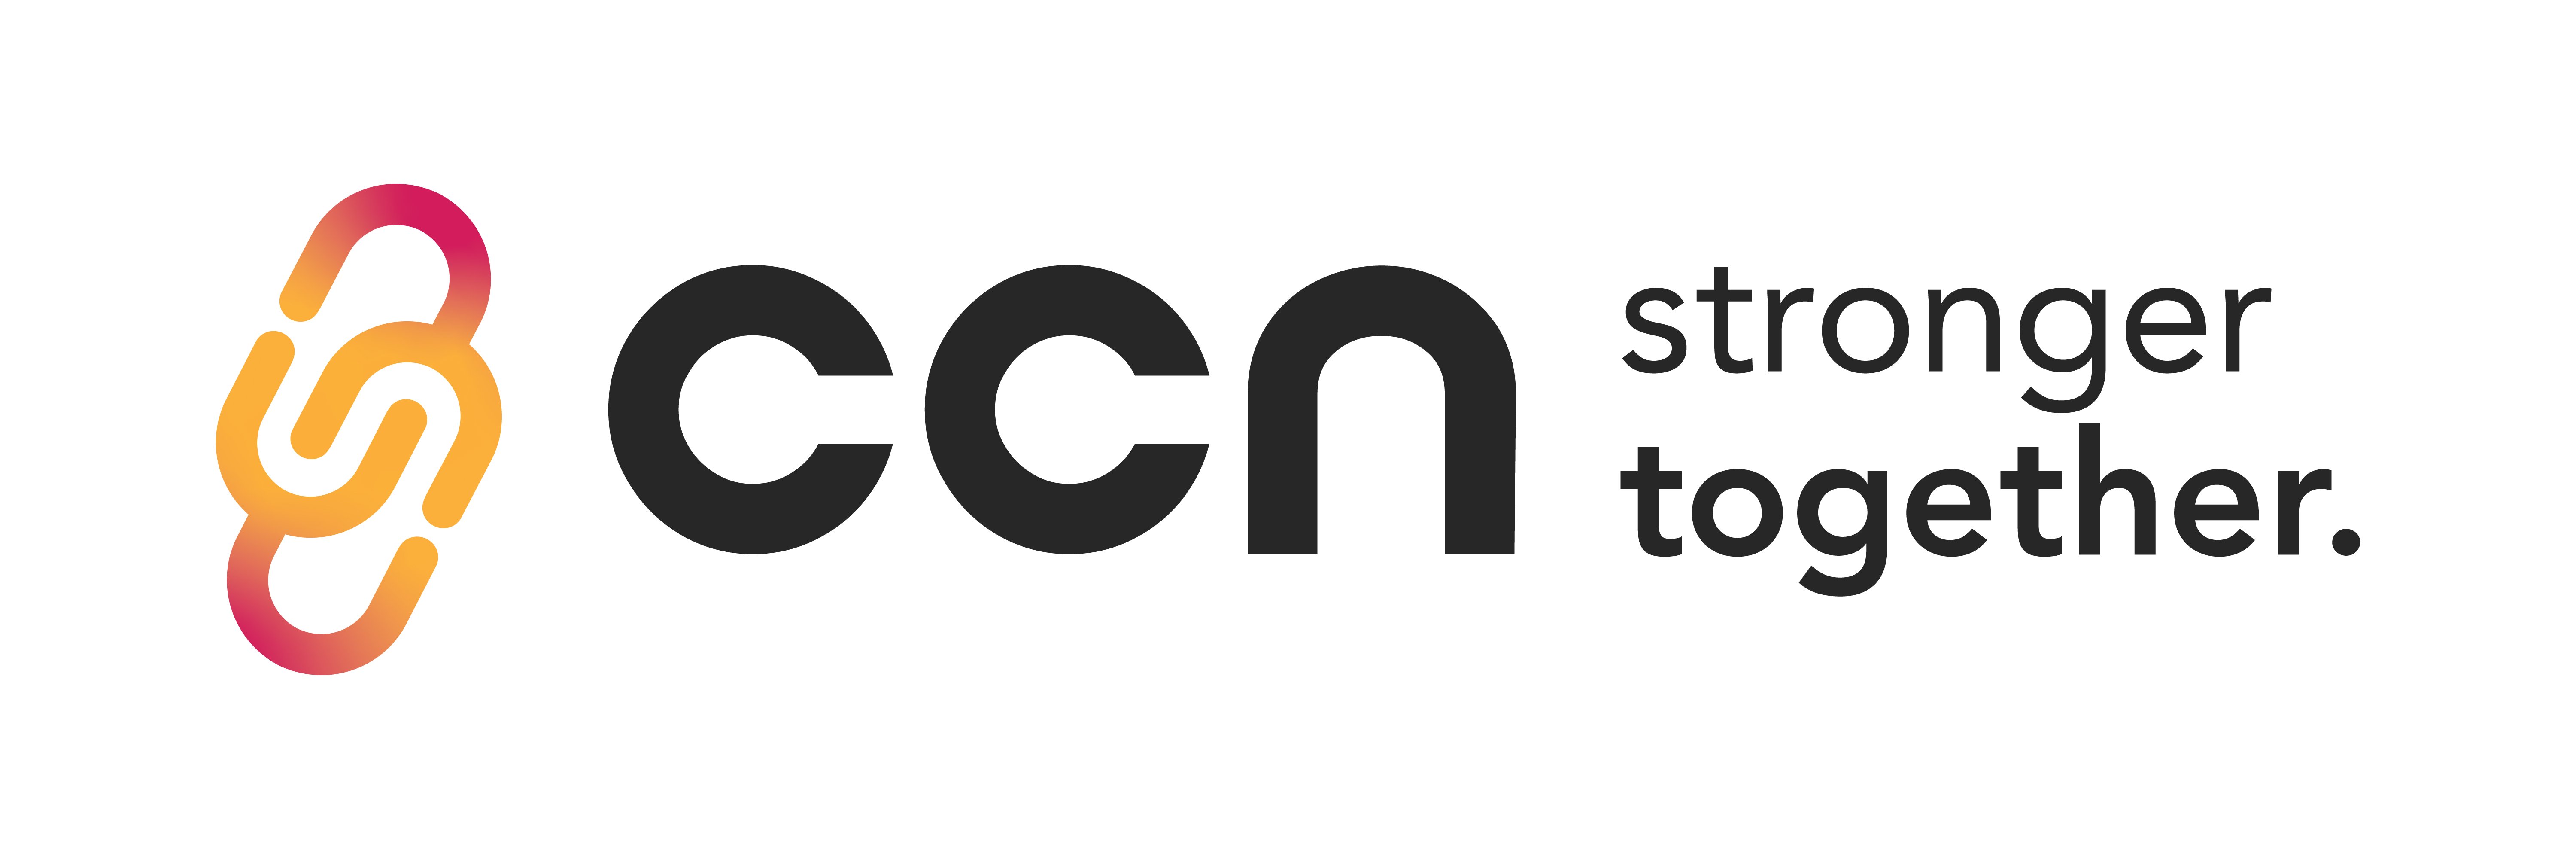 ccn-wordmark-w-tagline-colour (2)